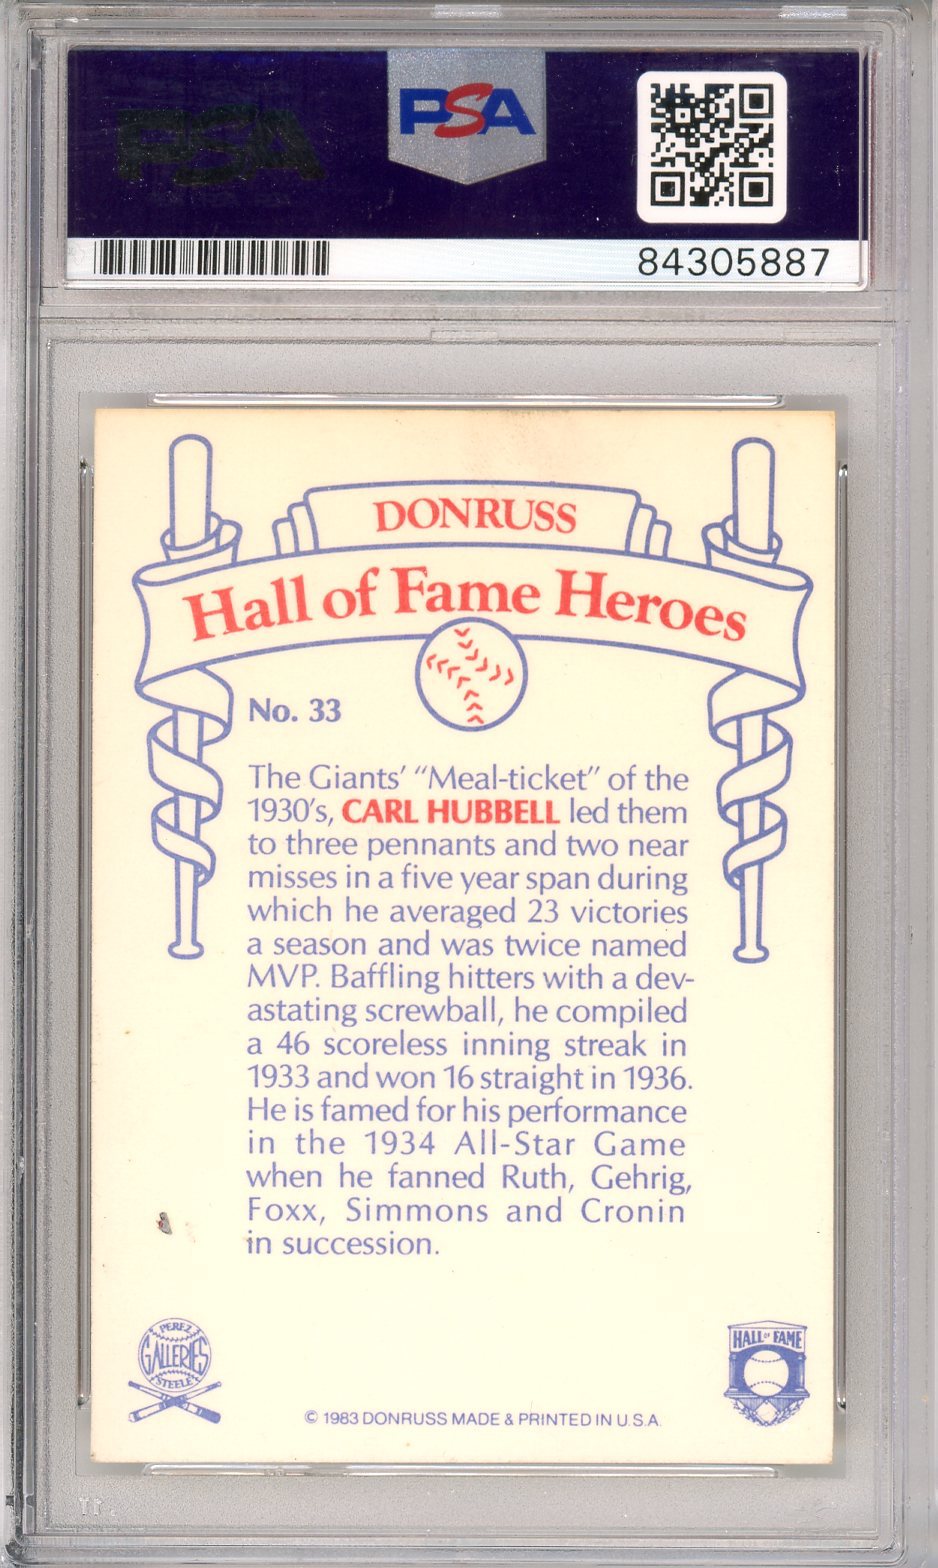 1983 DONRUSS CARL HUBBELL HOF HEROES AUTO #33 PSA DNA (887)